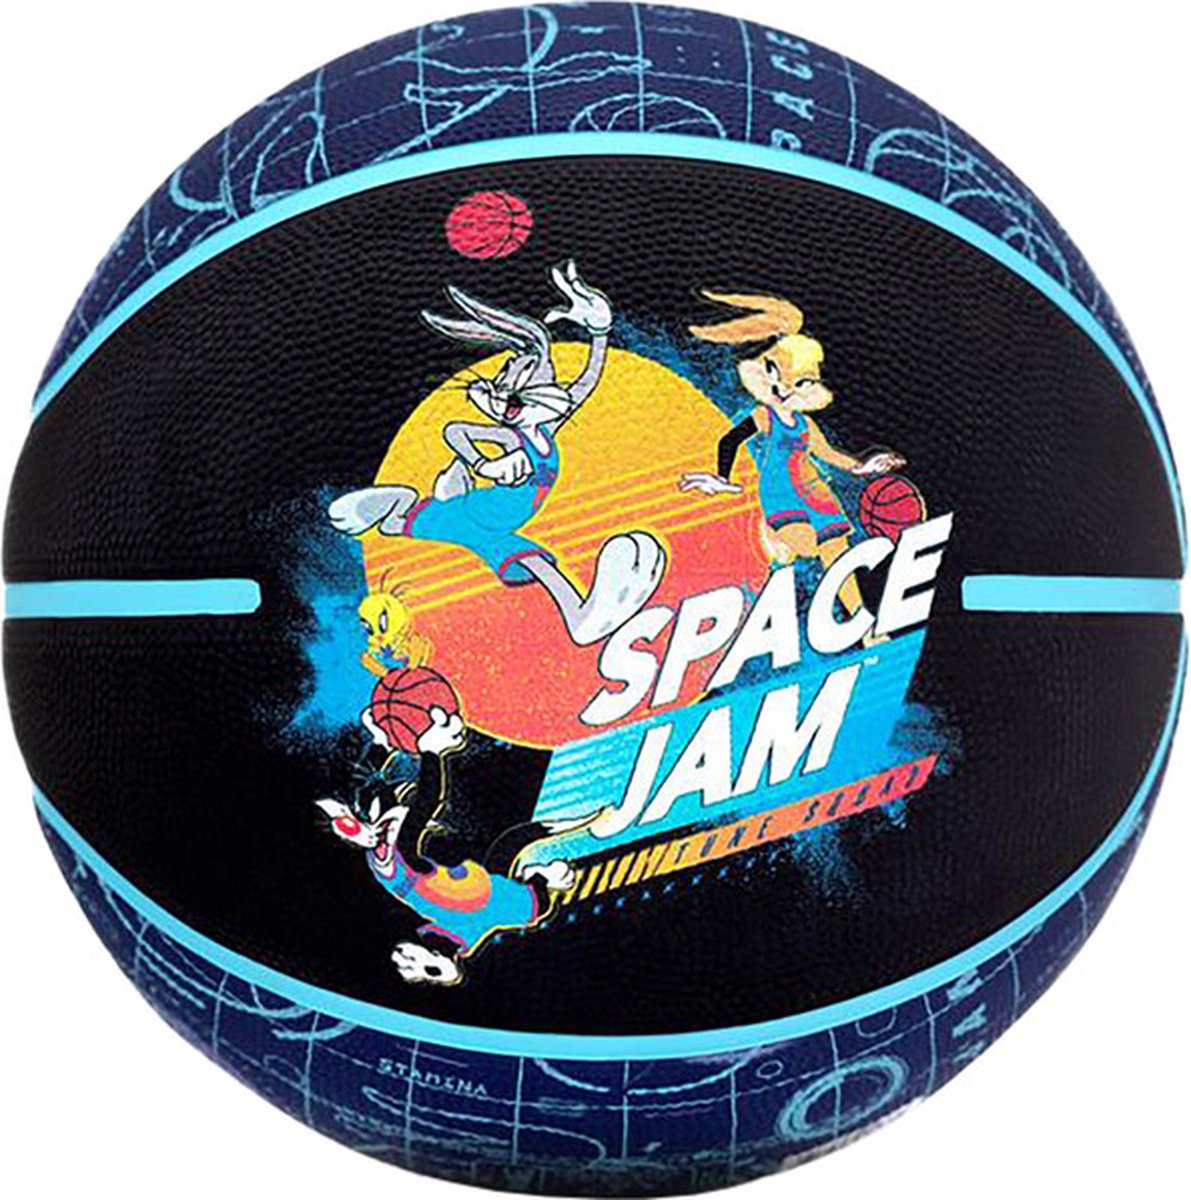 Spalding Space Jam: A New Legacy - basketbal - blauw - Spalding